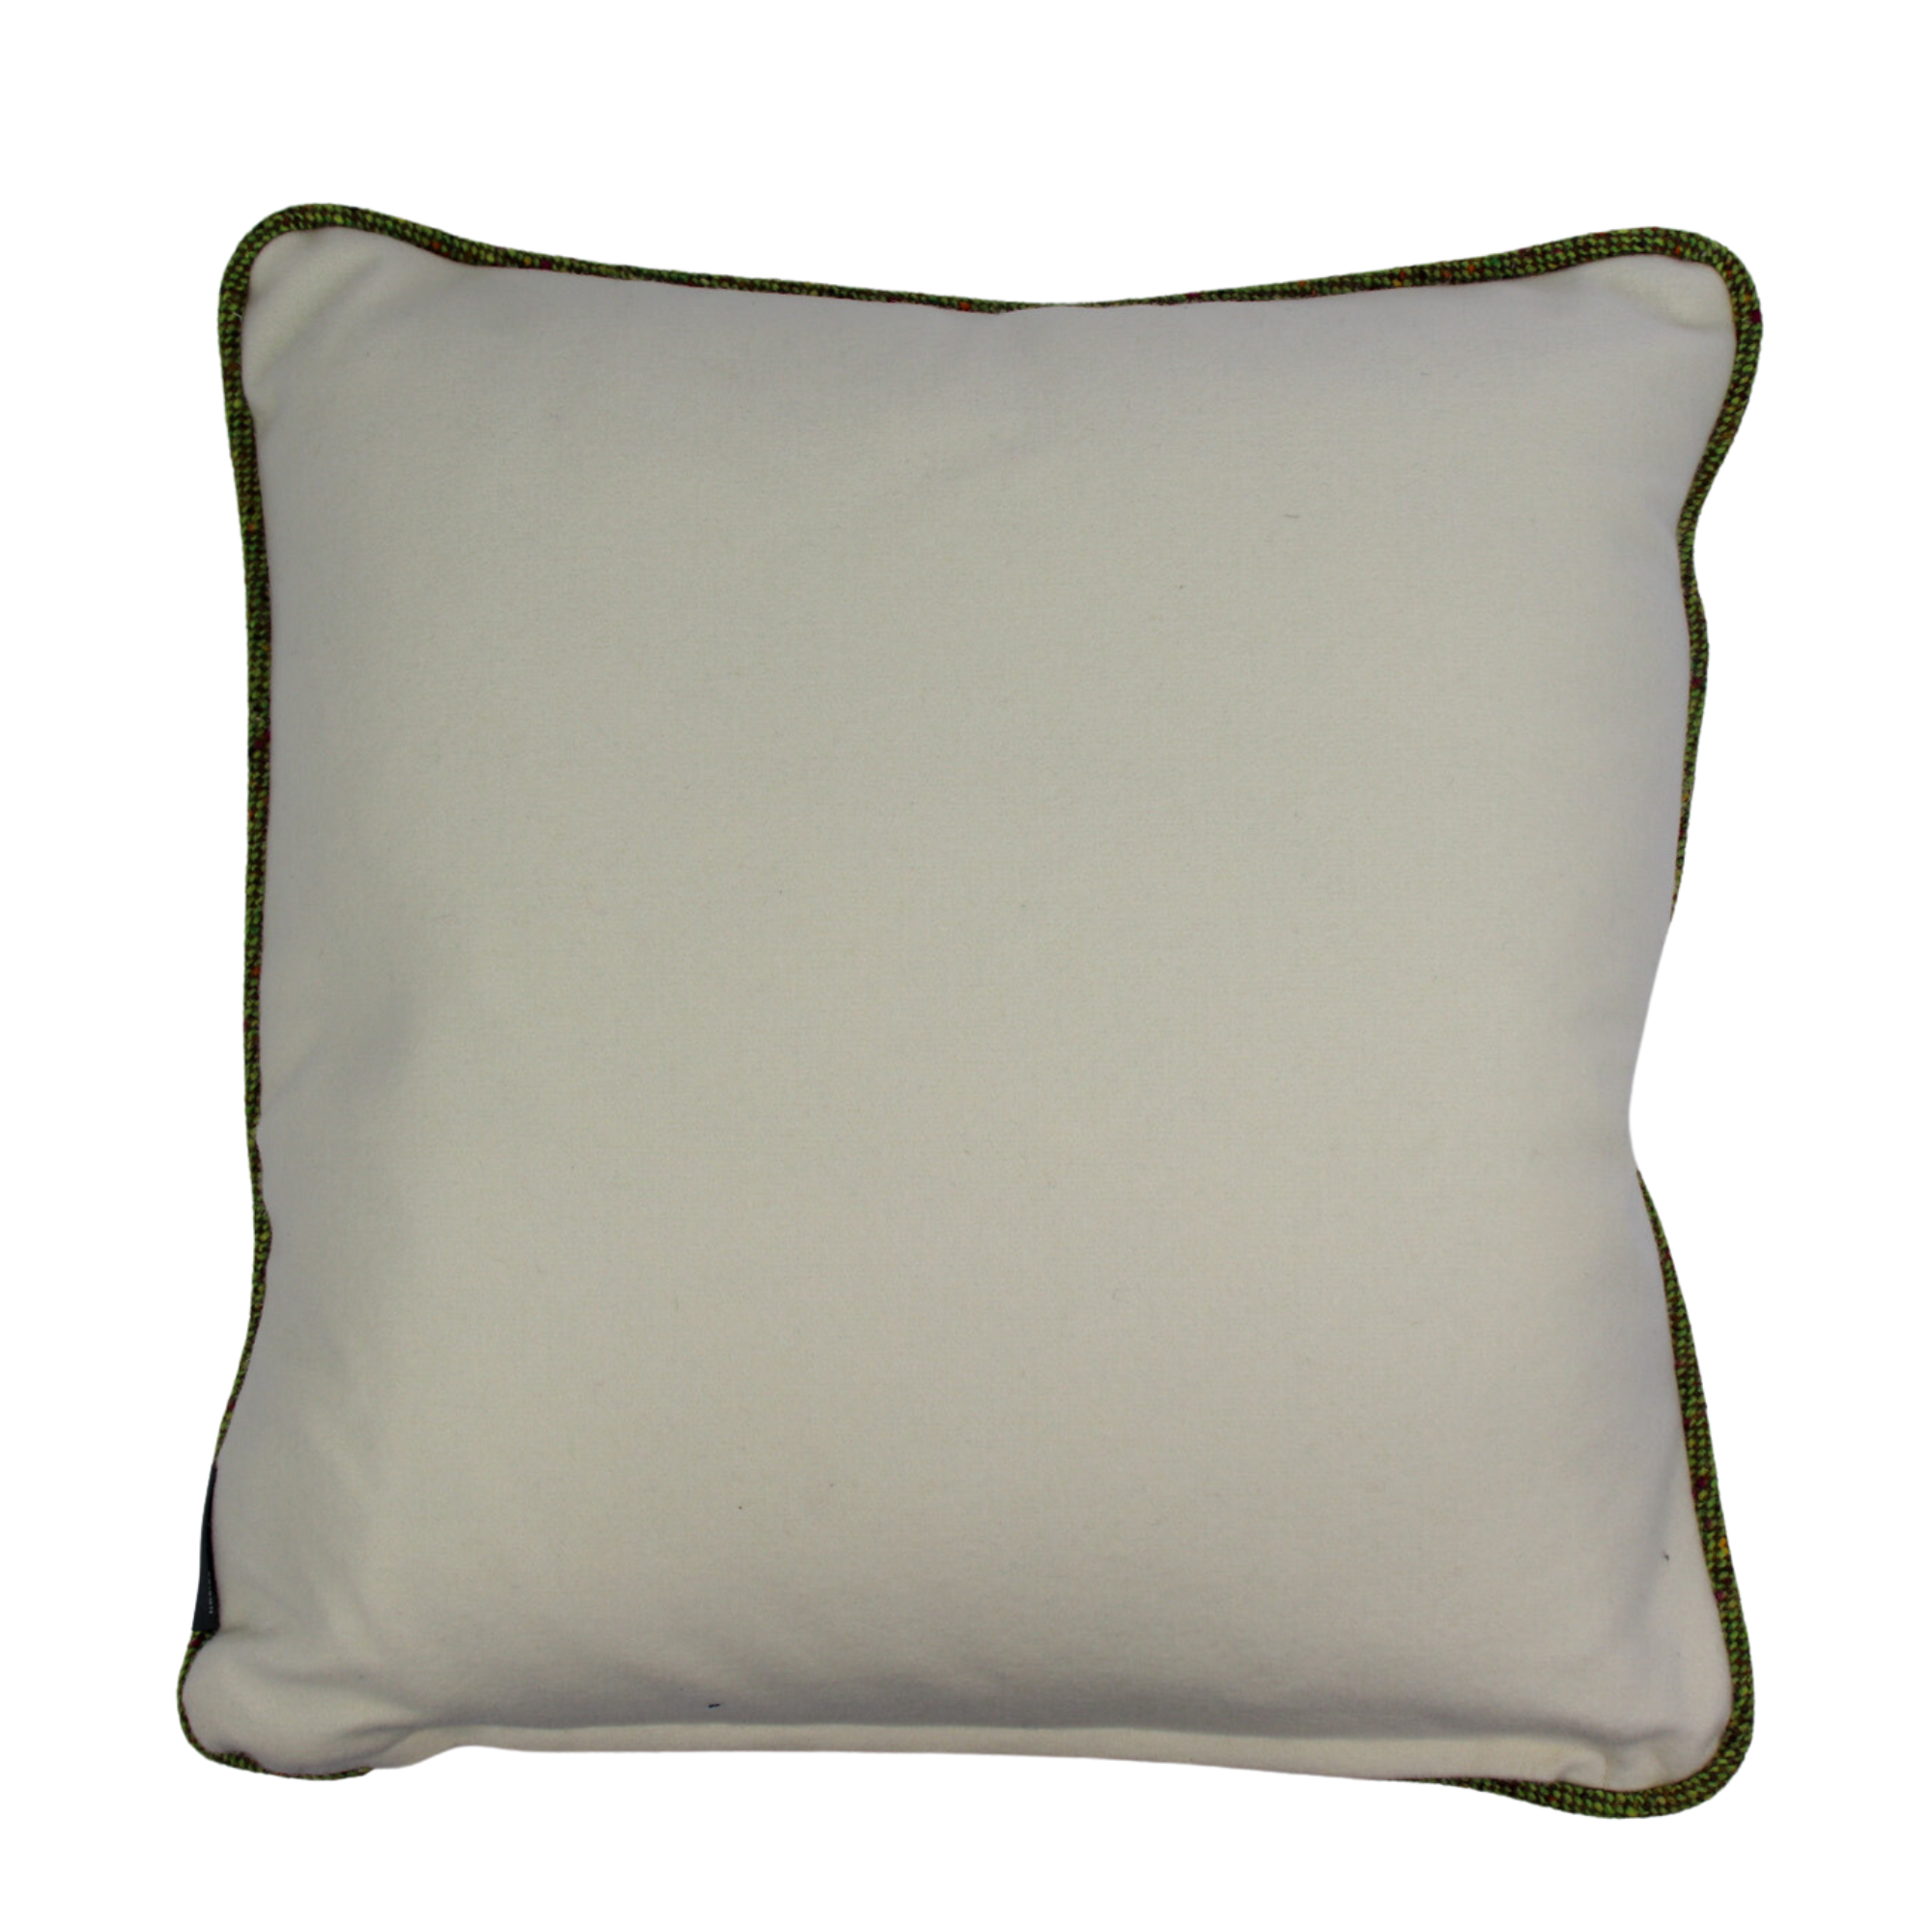 Needlepoint pillows – Handiwork